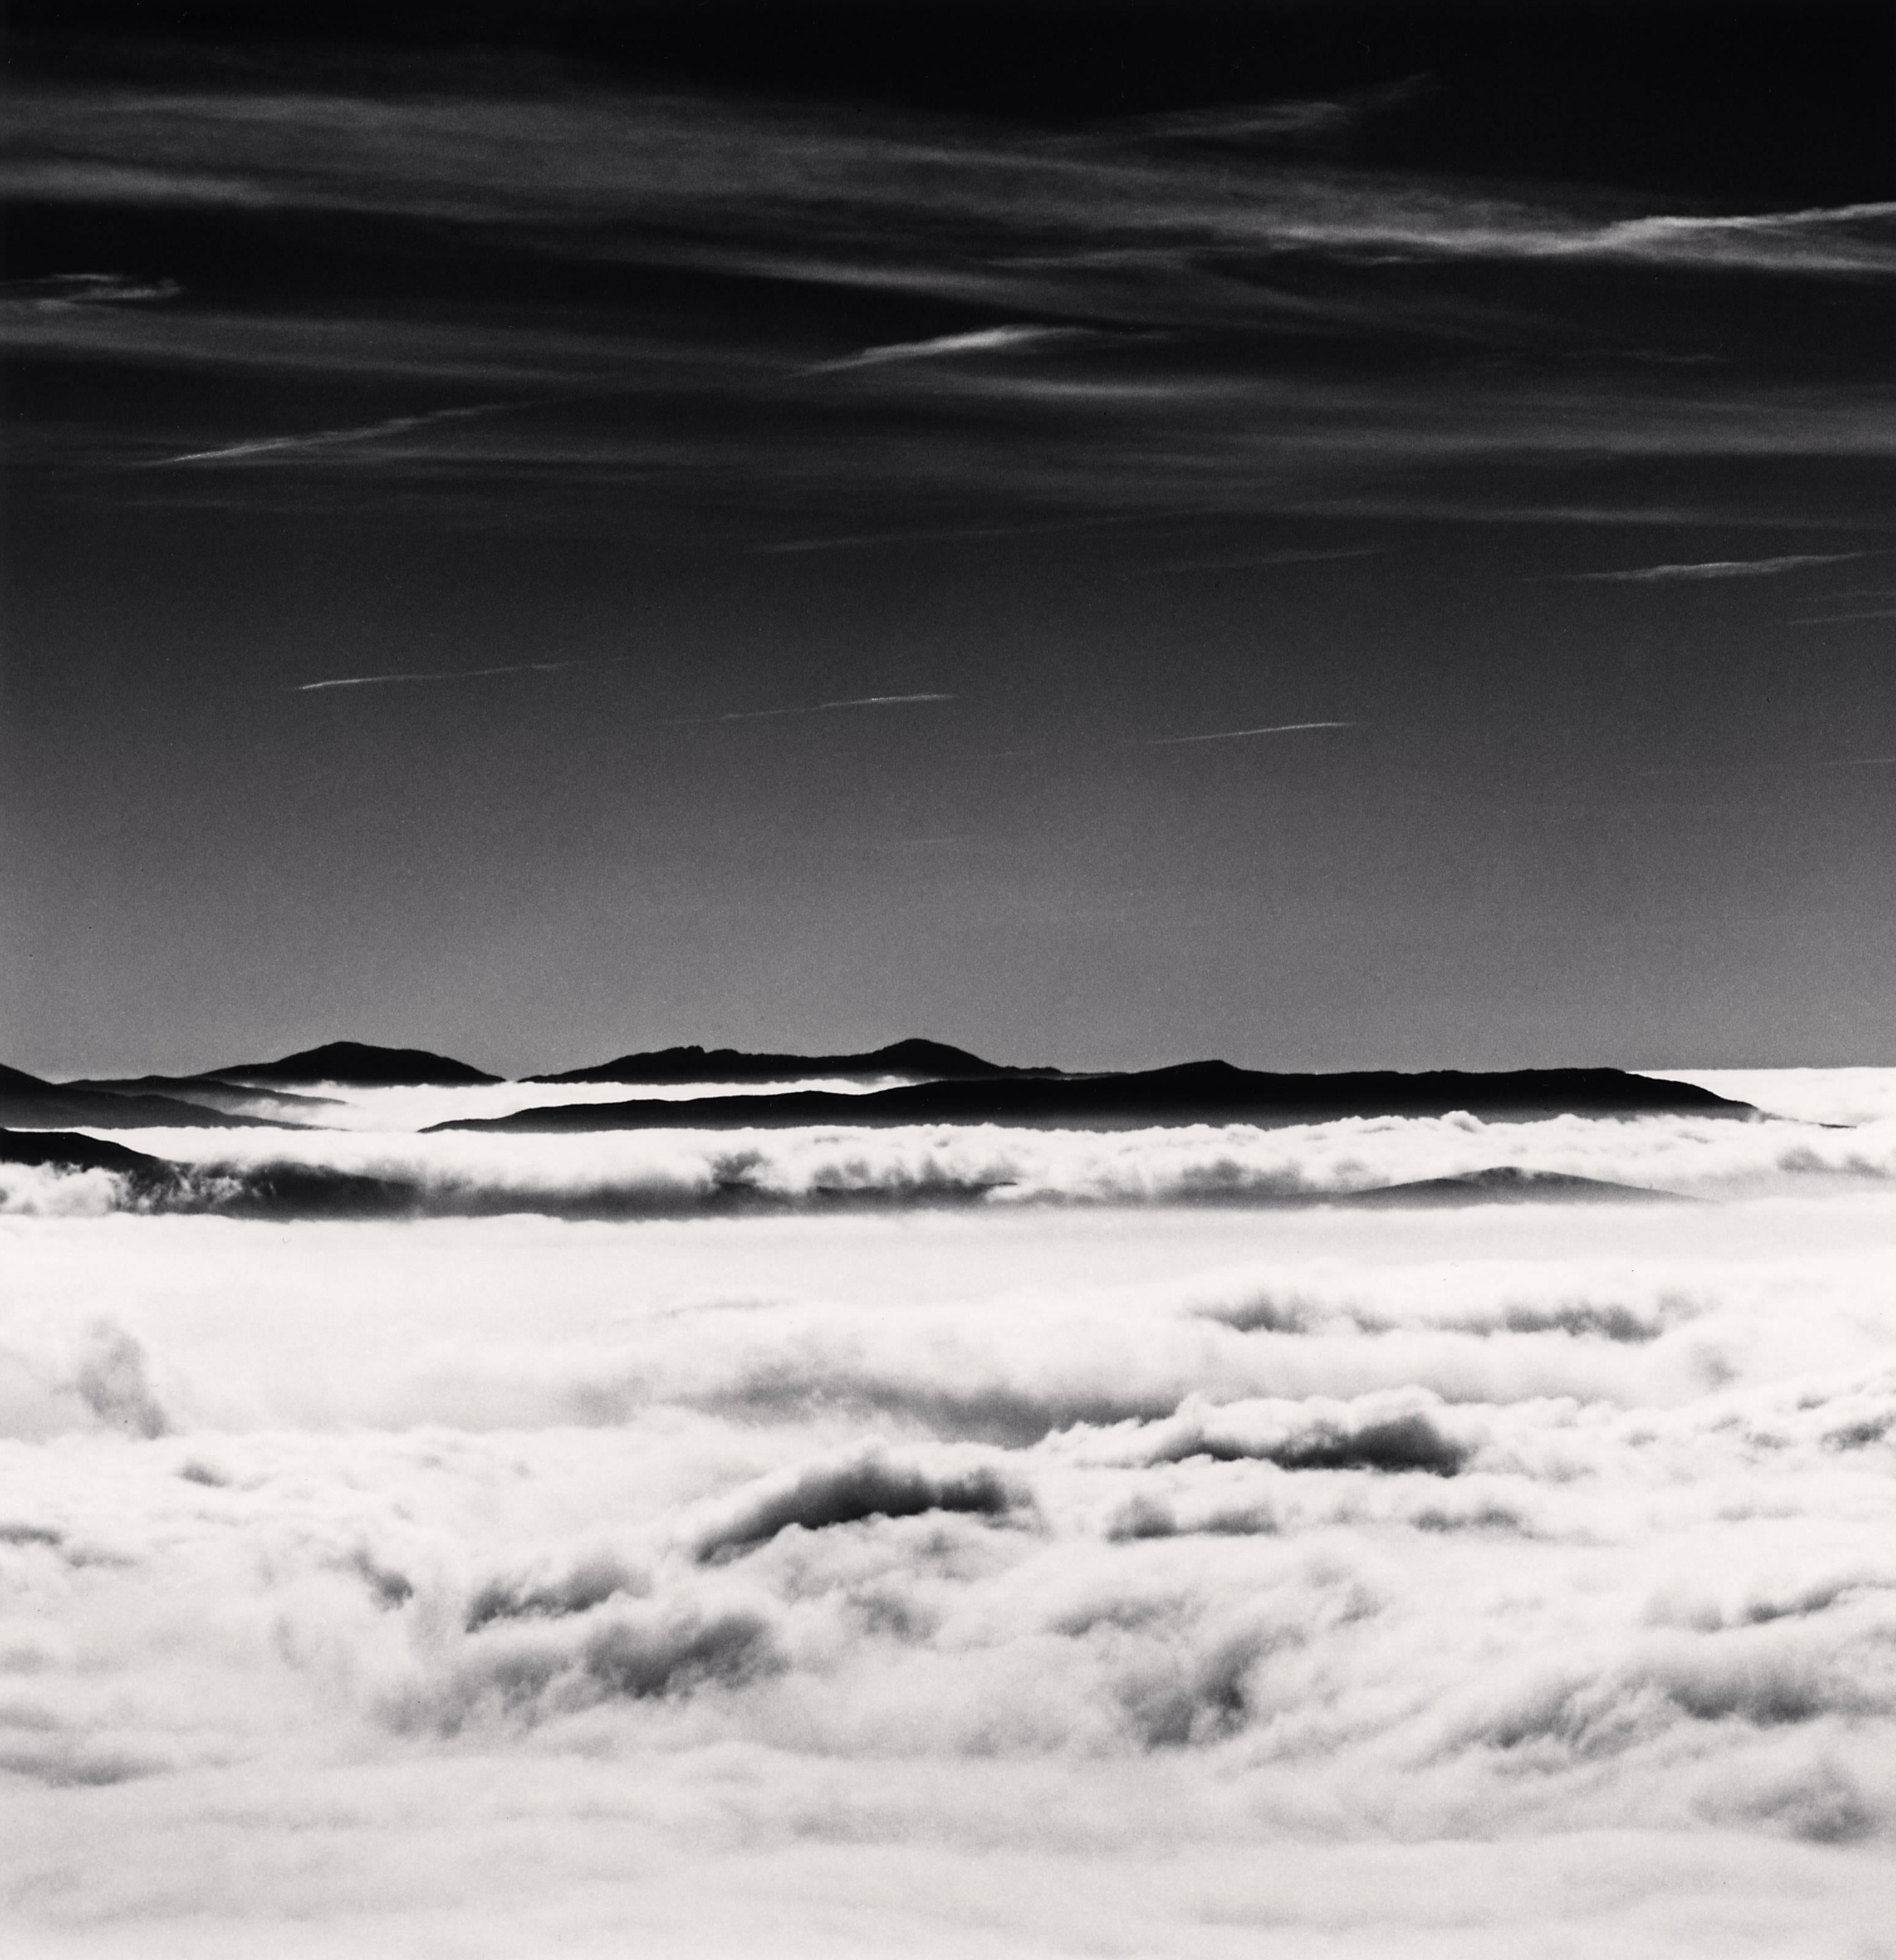 Michael Kenna Black and White Photograph – Über die Wolken, Campo Imperatore, Abruzzo, Italien